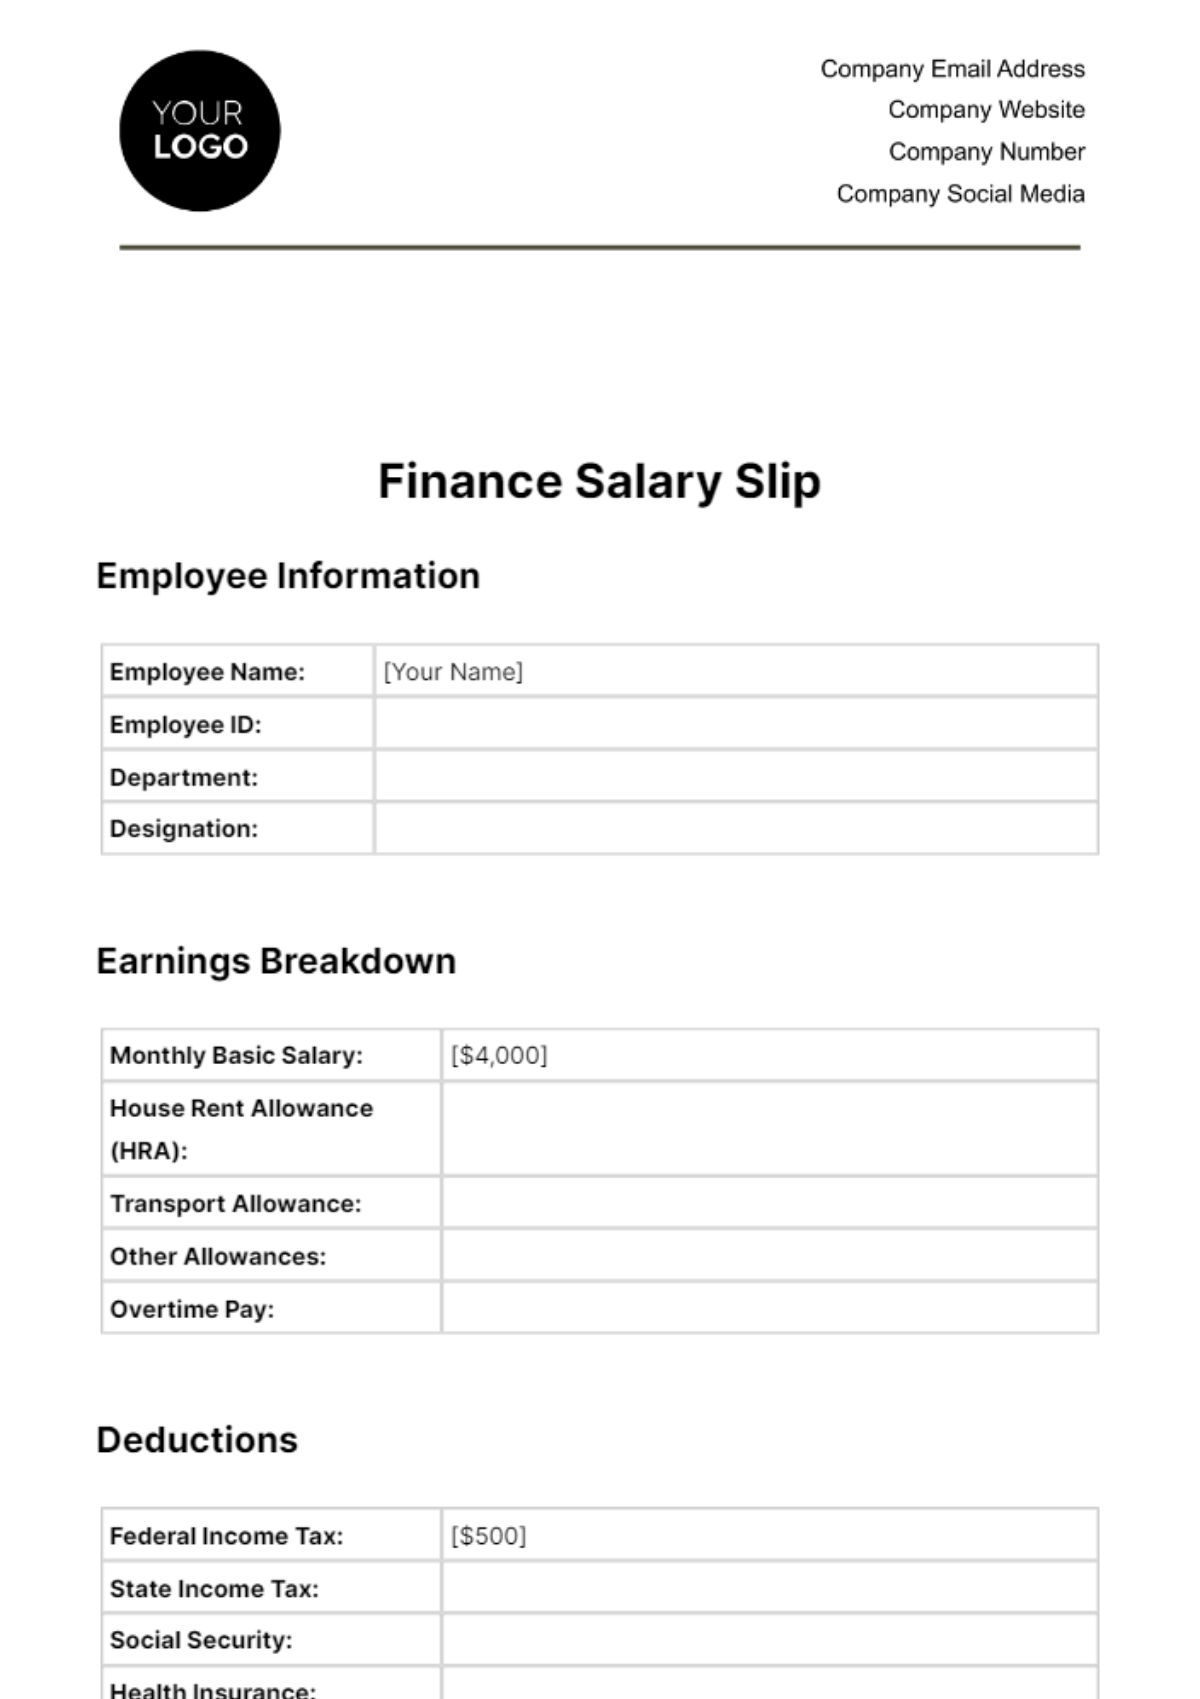 Free Finance Salary Slip Template